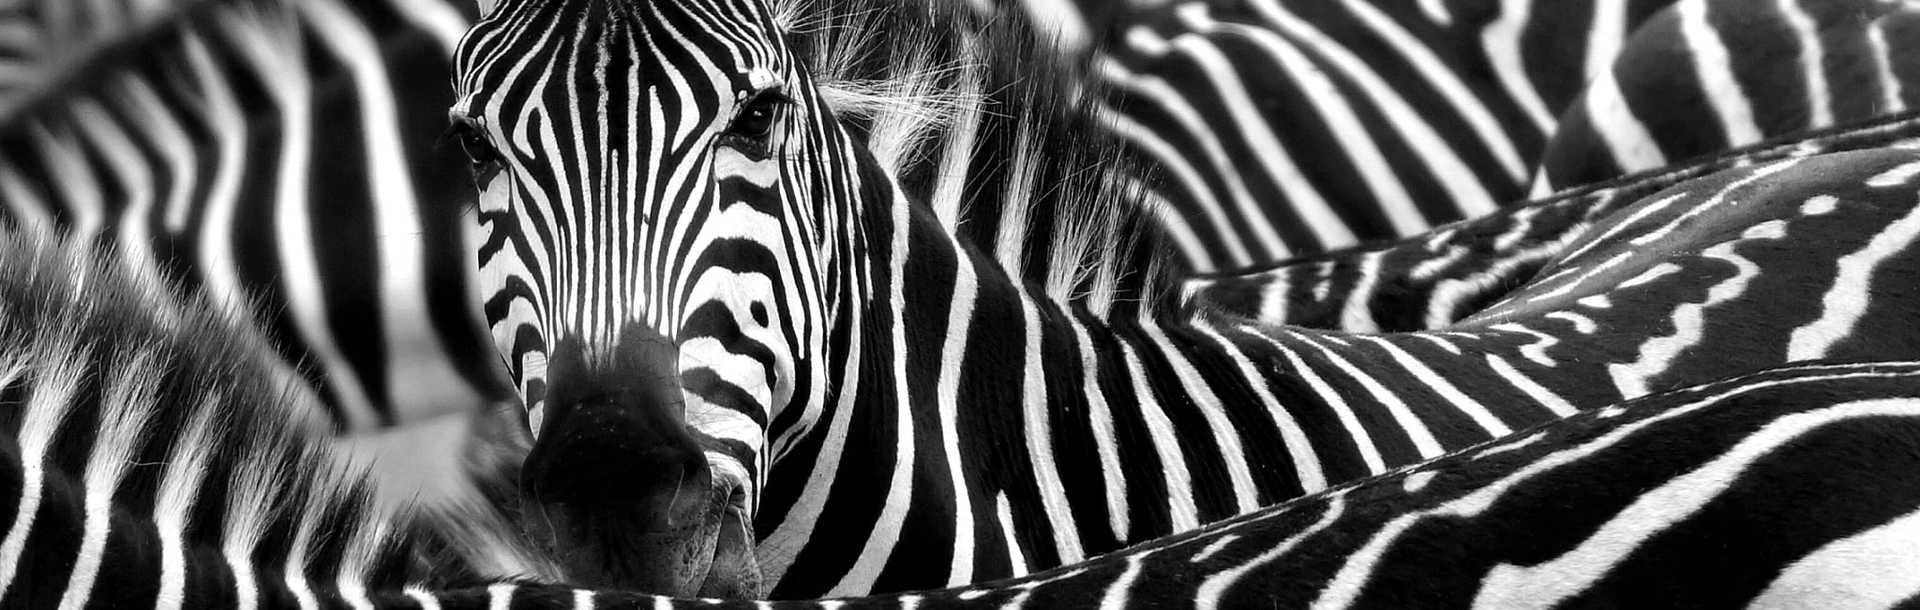 Dazzle of Zebras in Kenya, Africa